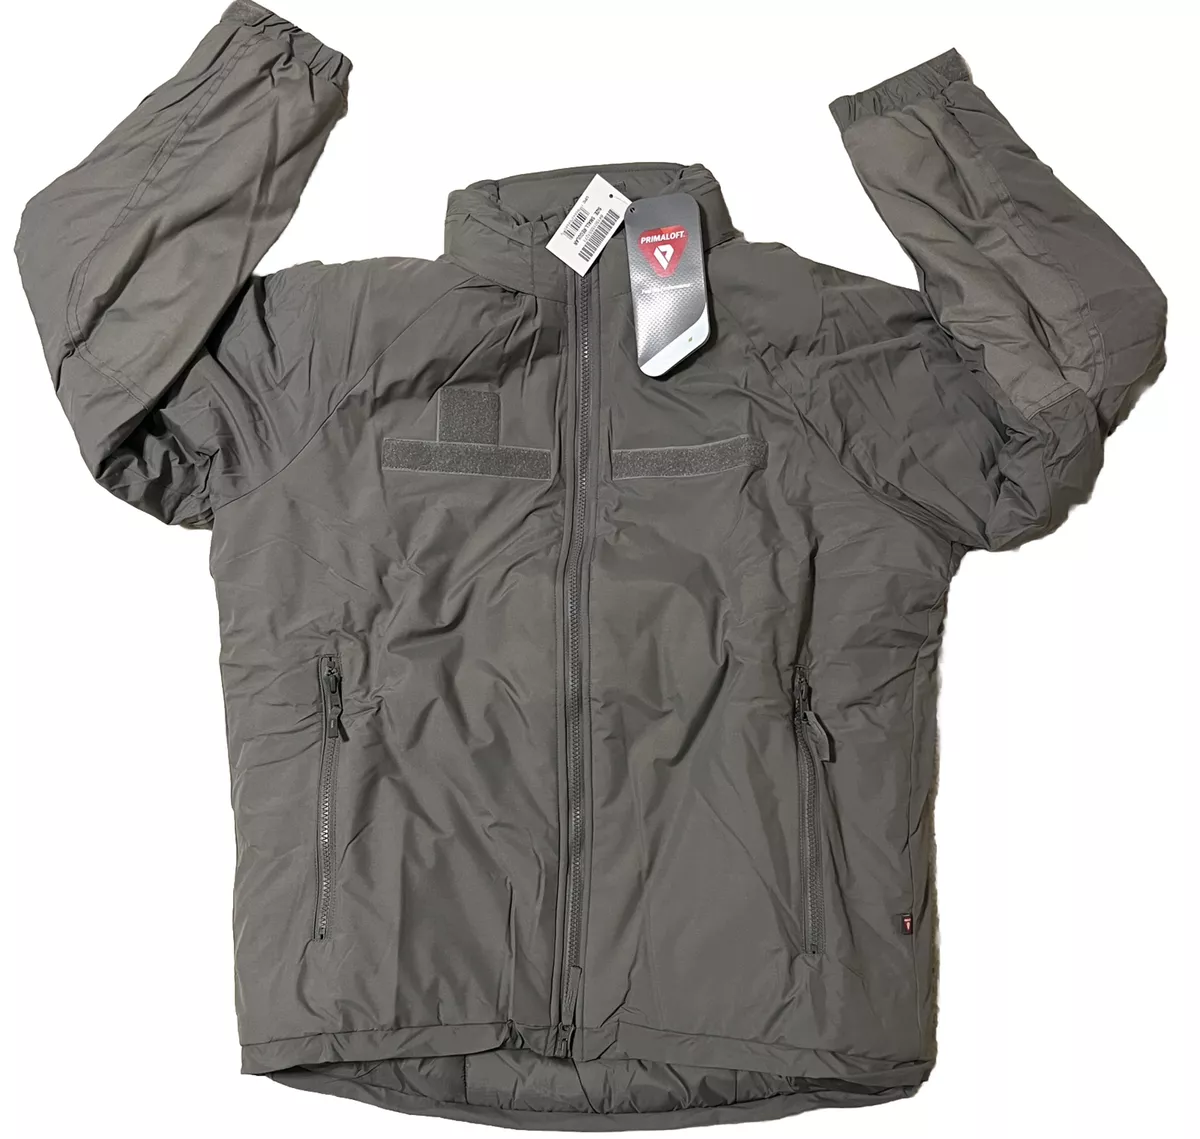 US Army Cold Weather Parka Primaloft Jacket PCU ECWCS Gen III